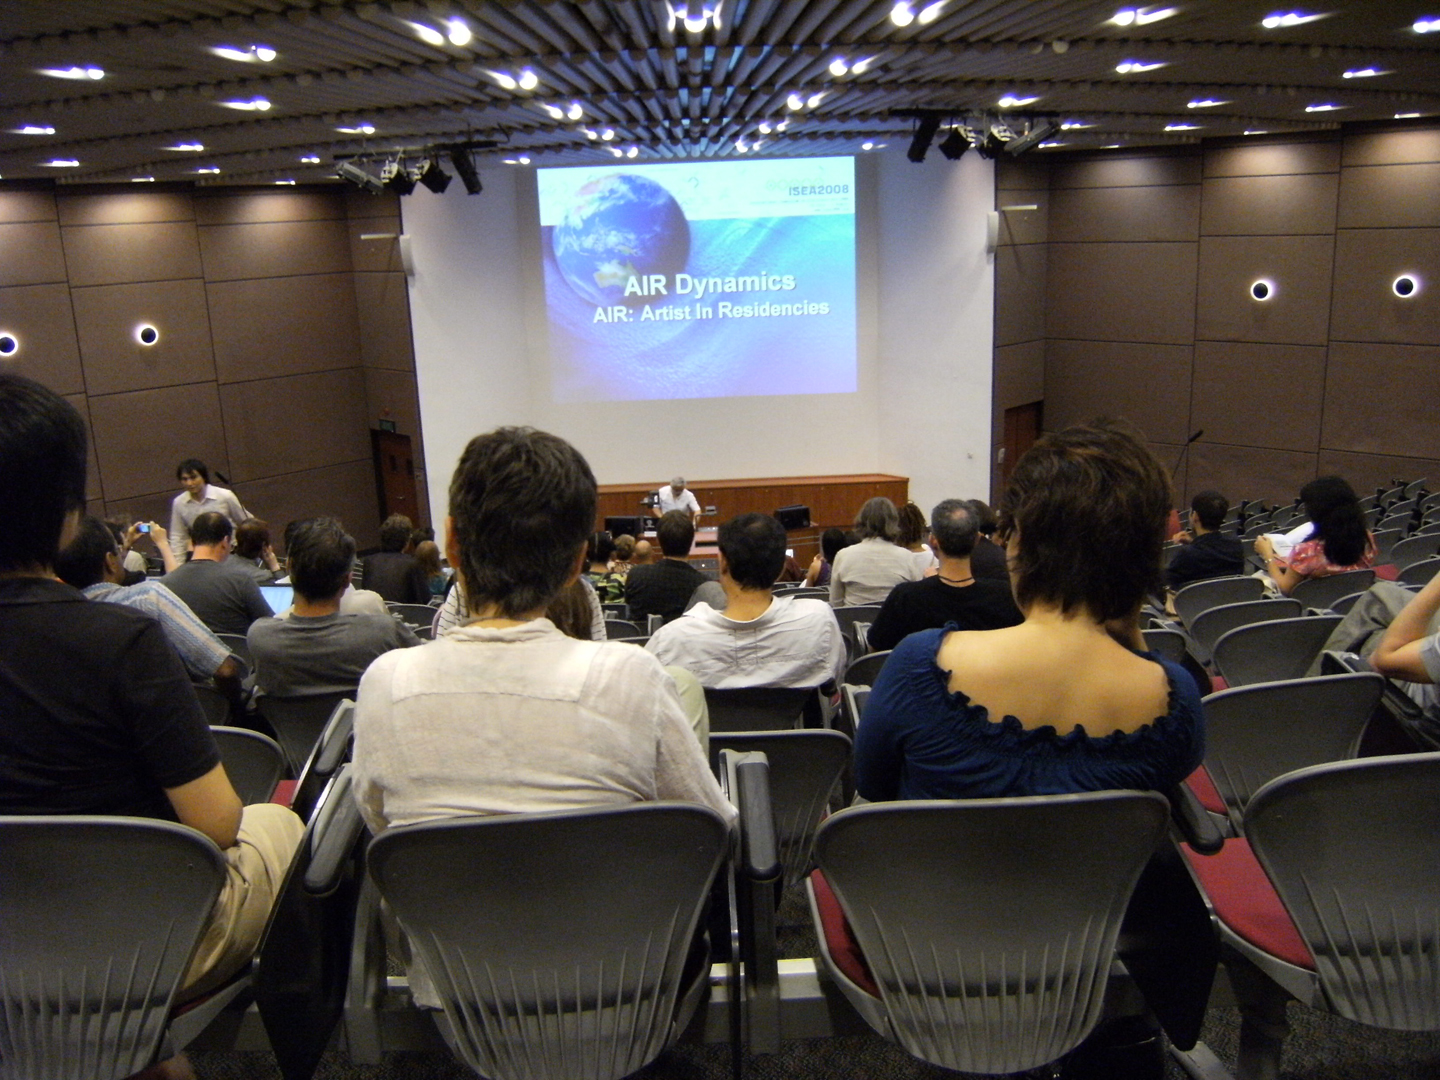 ©ISEA2008: 14th International Symposium on Electronic Art, Sam Furukawa, Air Dynamics